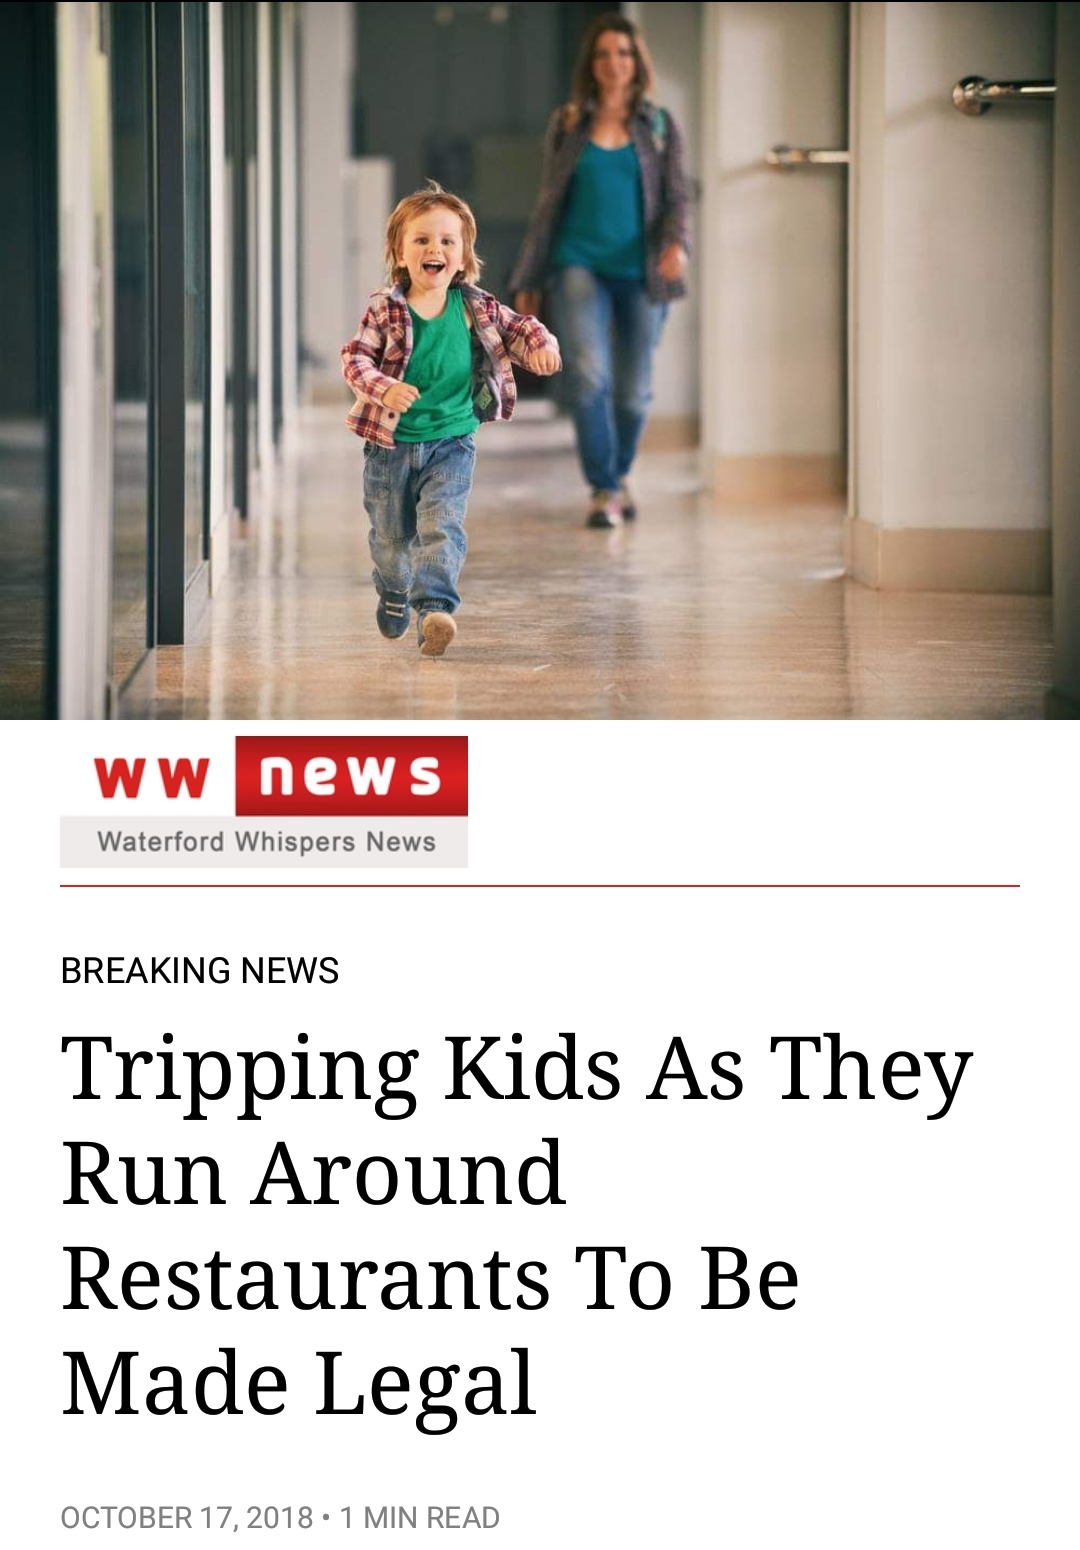 work meme with headline about it being legal to trip kids who run around restaurants